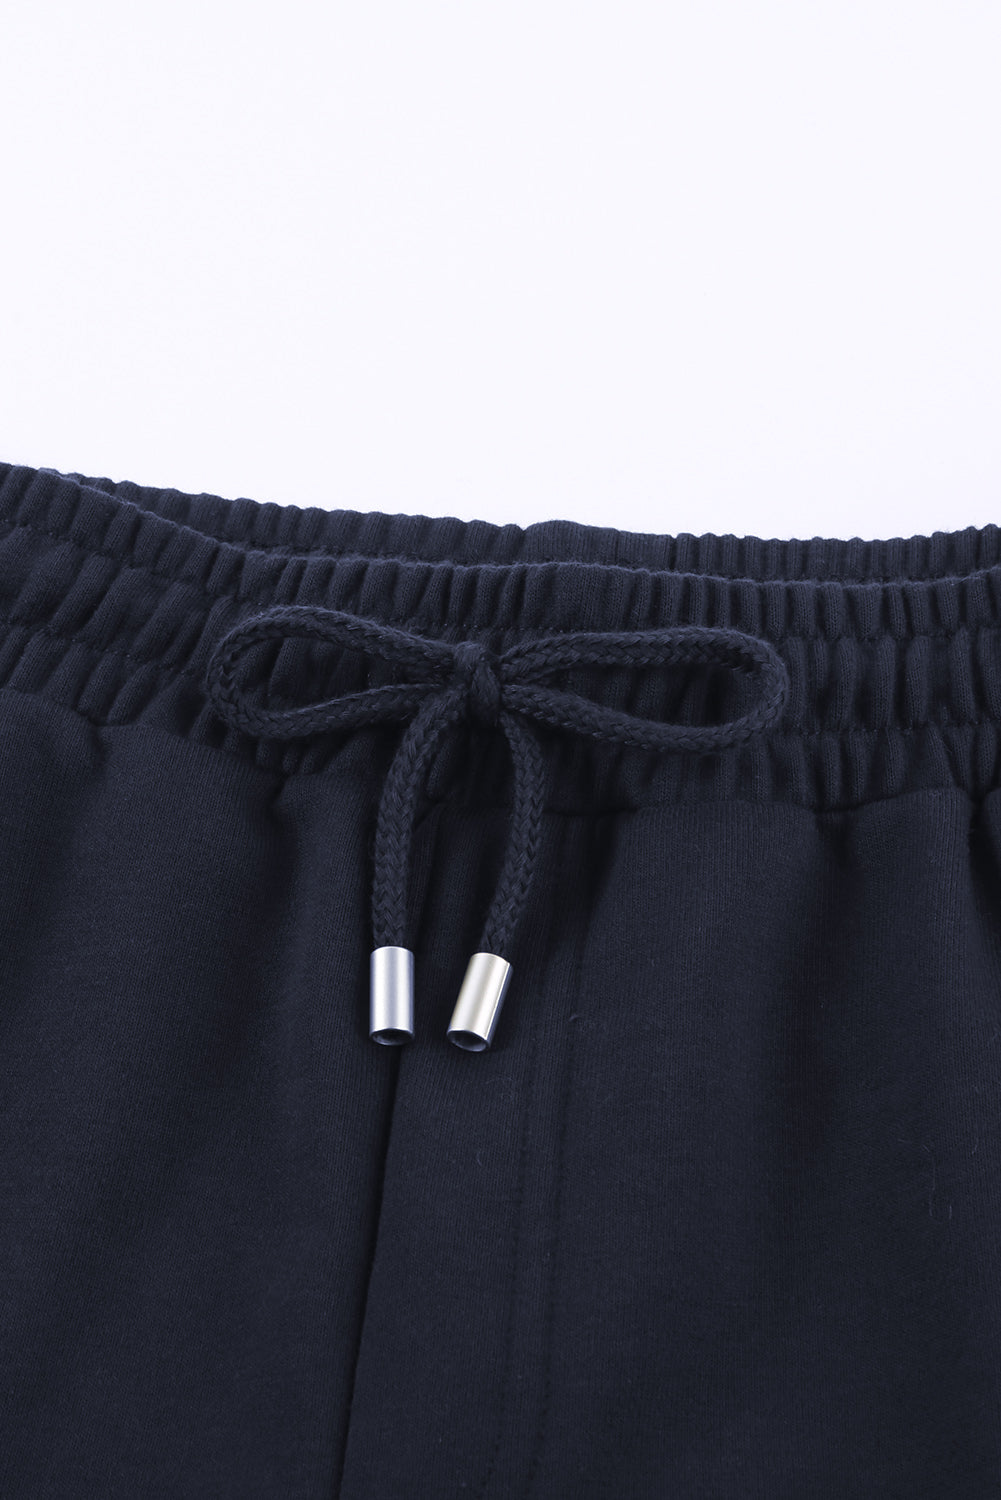 Drawstring Waist Cuffed Shorts Print on any thing USA/STOD clothes